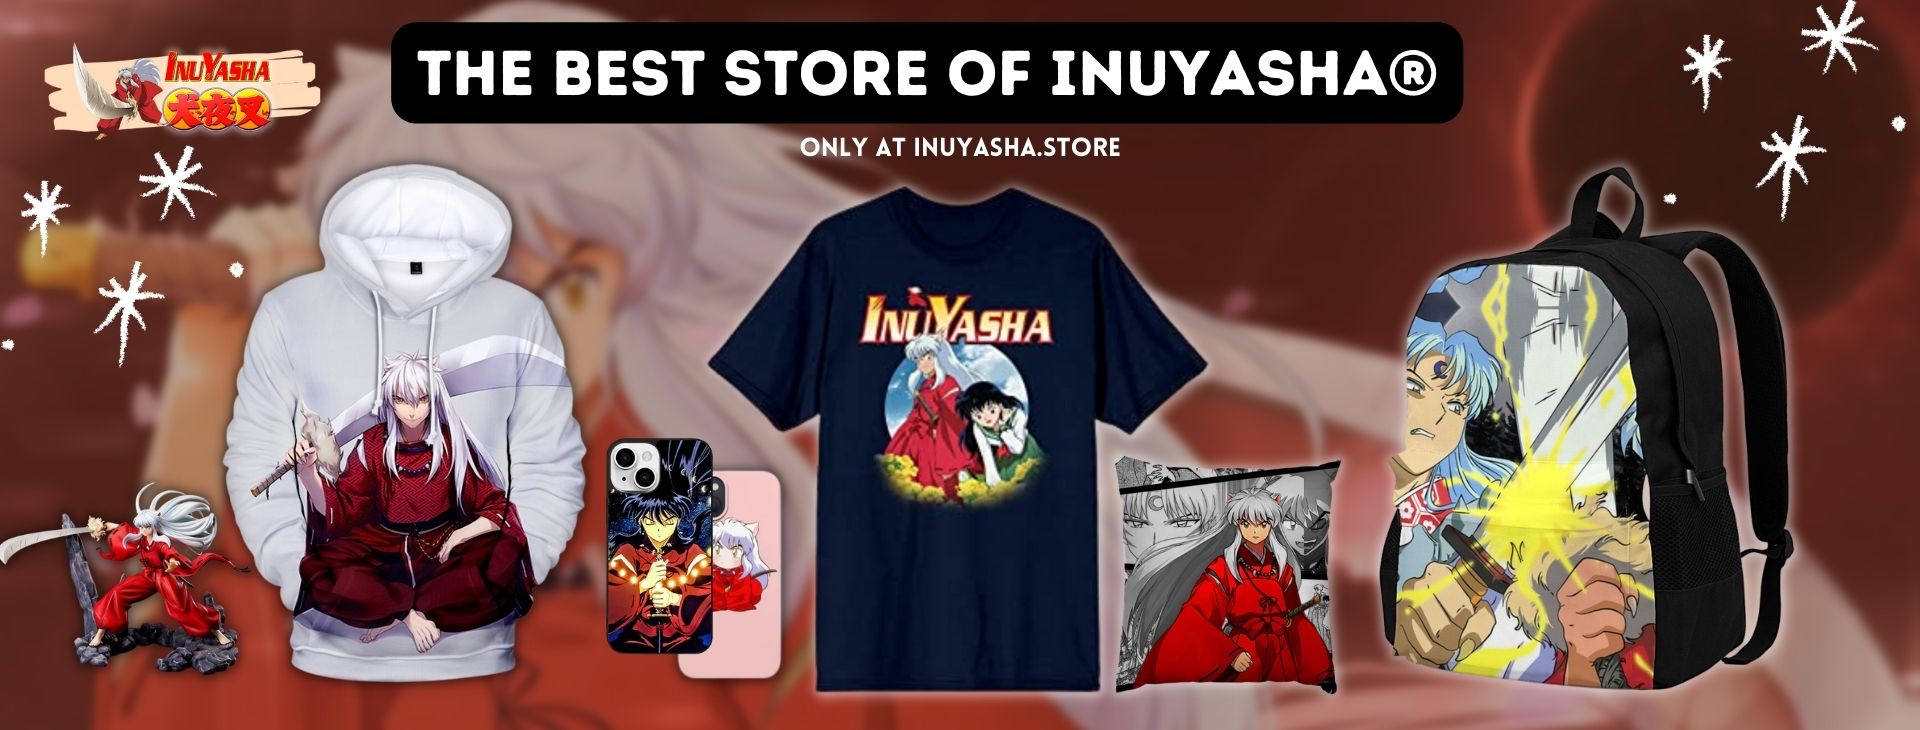 inuyasha Store Banner - Inuyasha Store